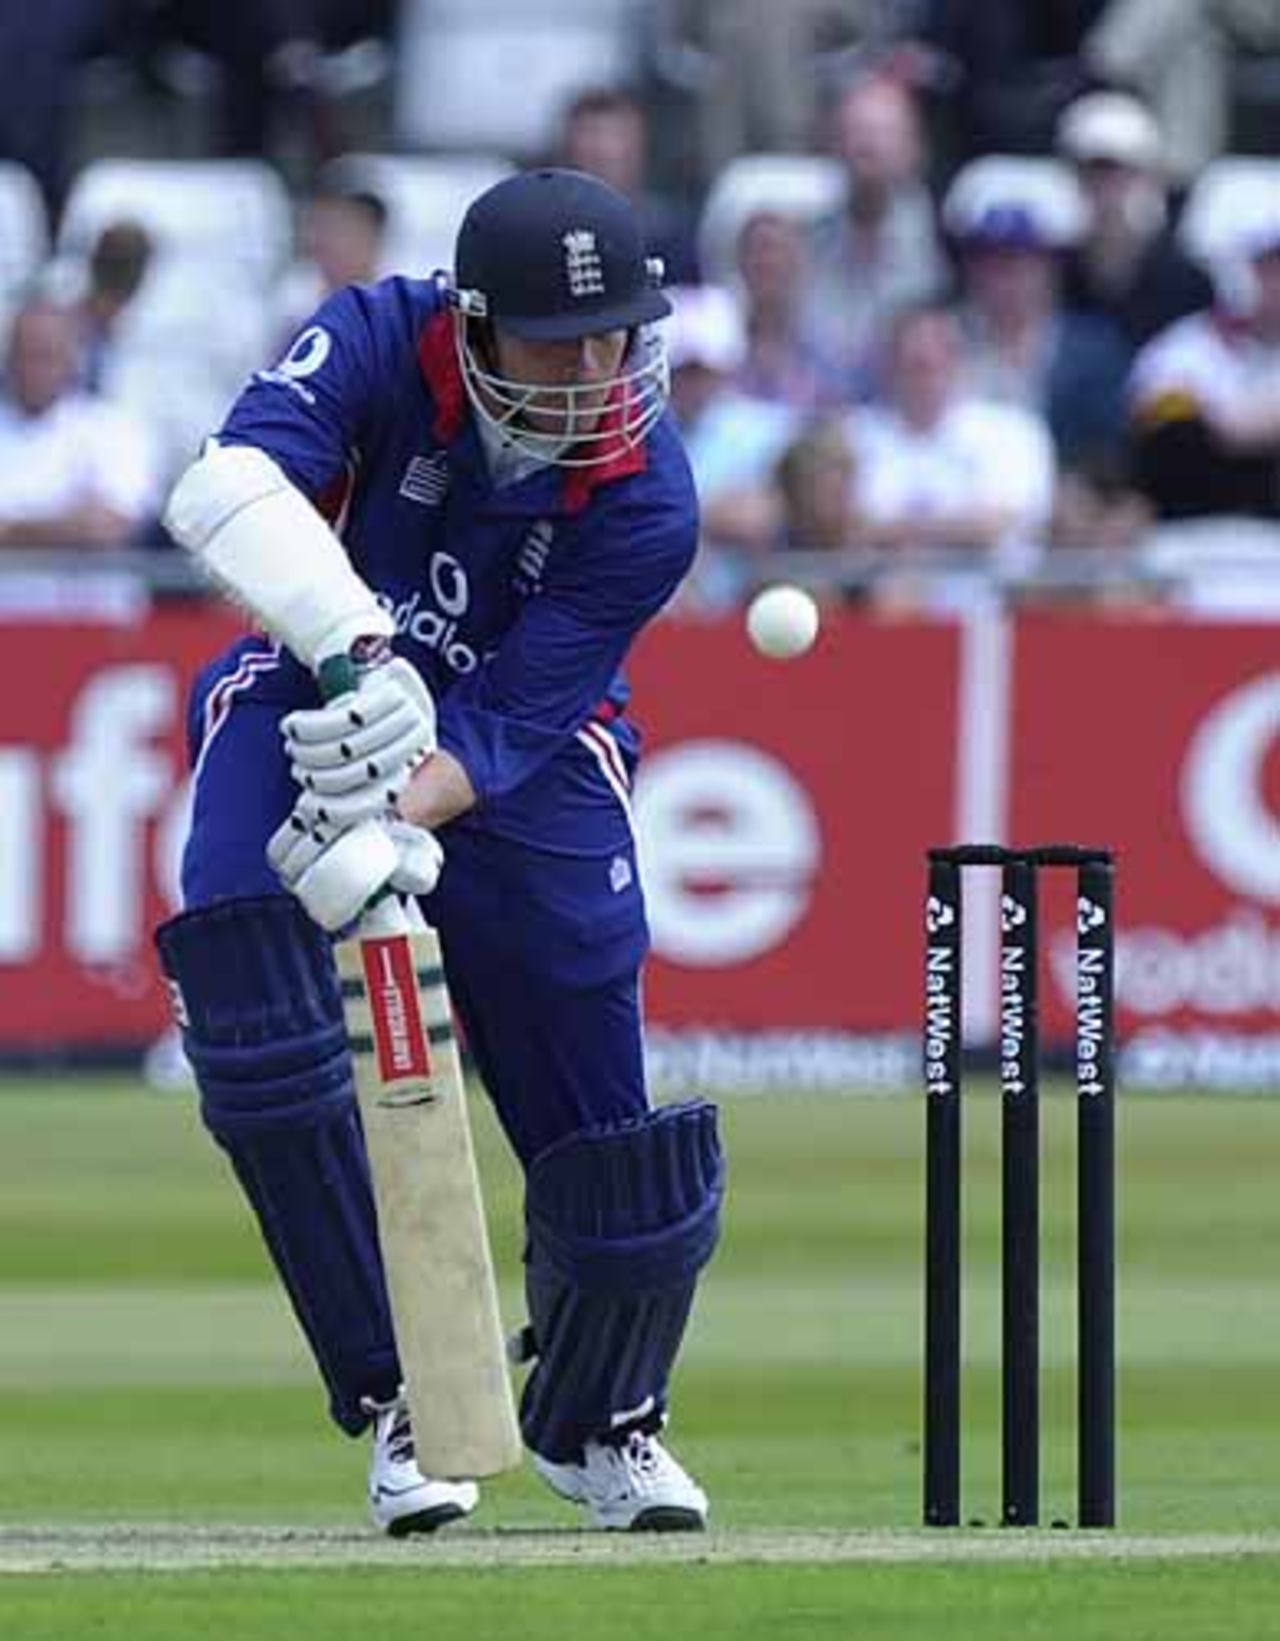 Nick Knight on the forward defensive in his innings of 20, England v Sri Lanka at Trent Bridge